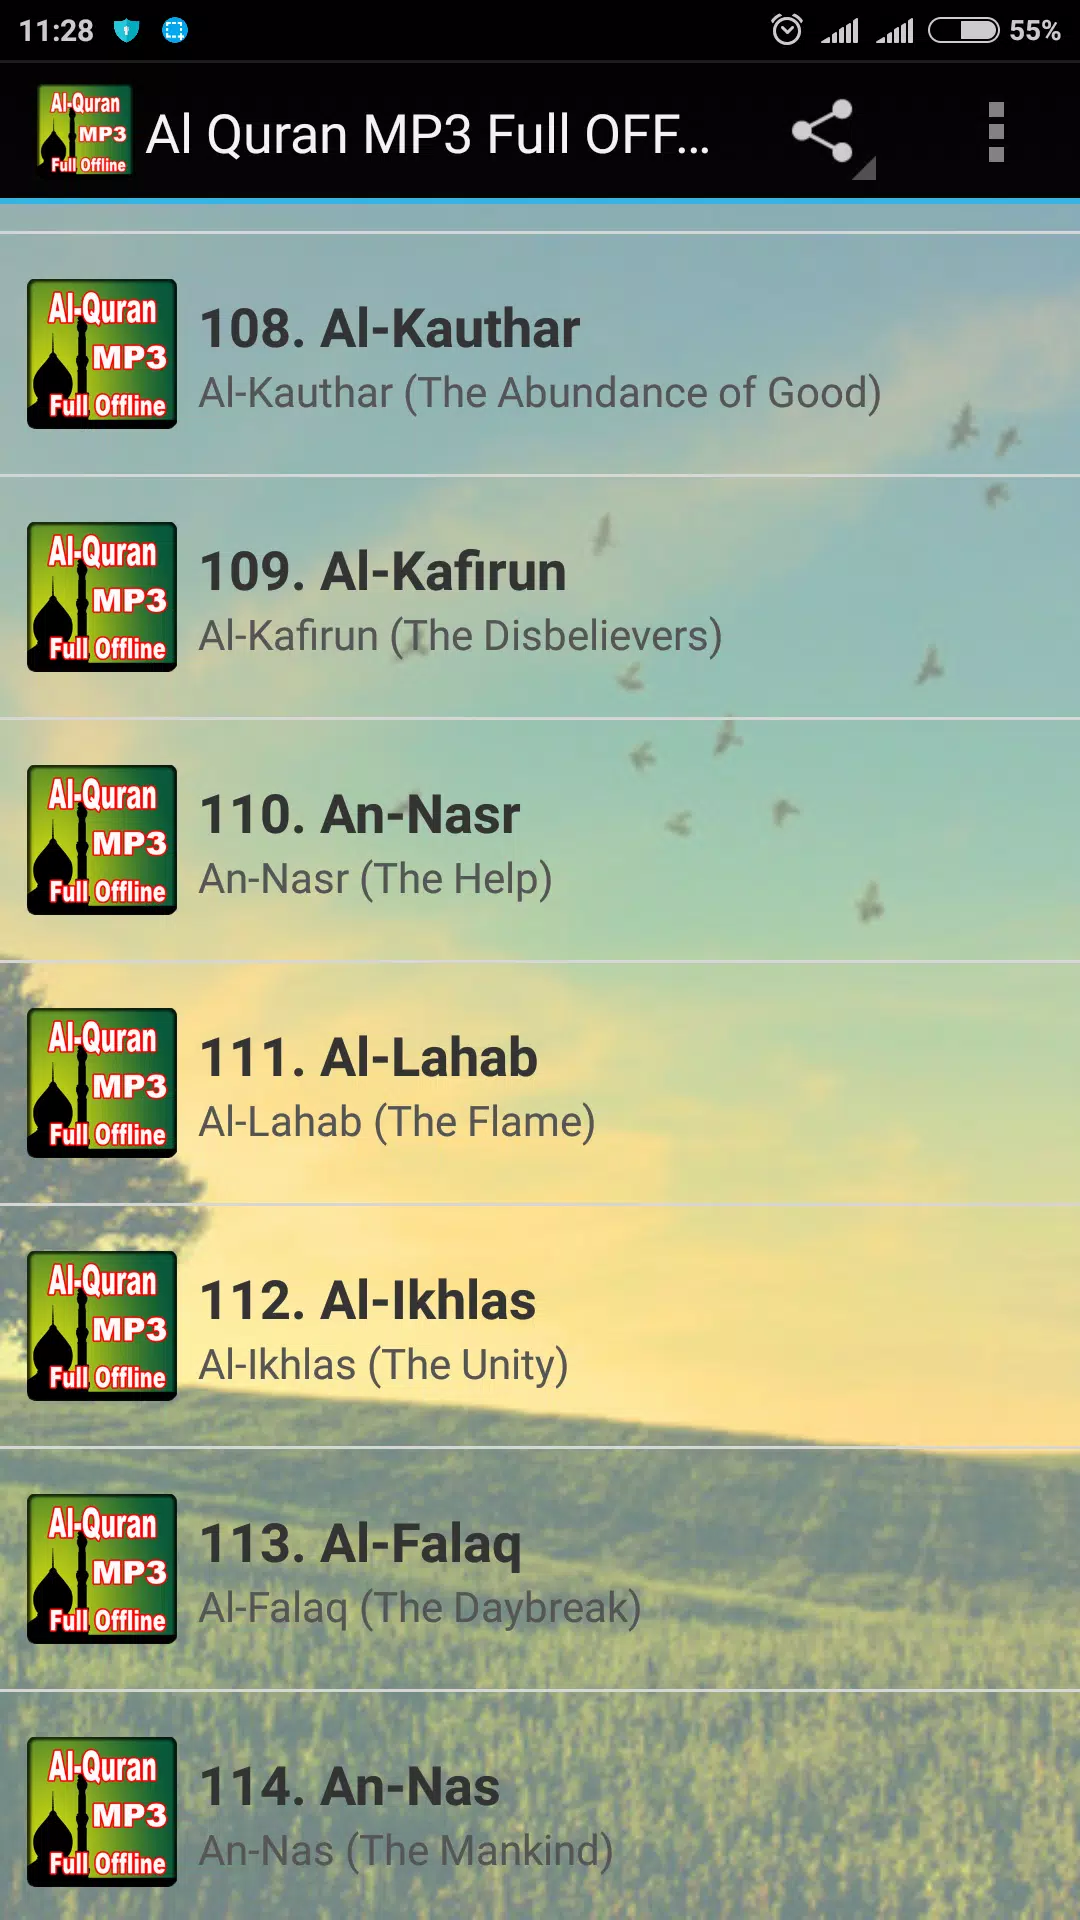 Al Quran MP3 Full Offline APK for Android Download